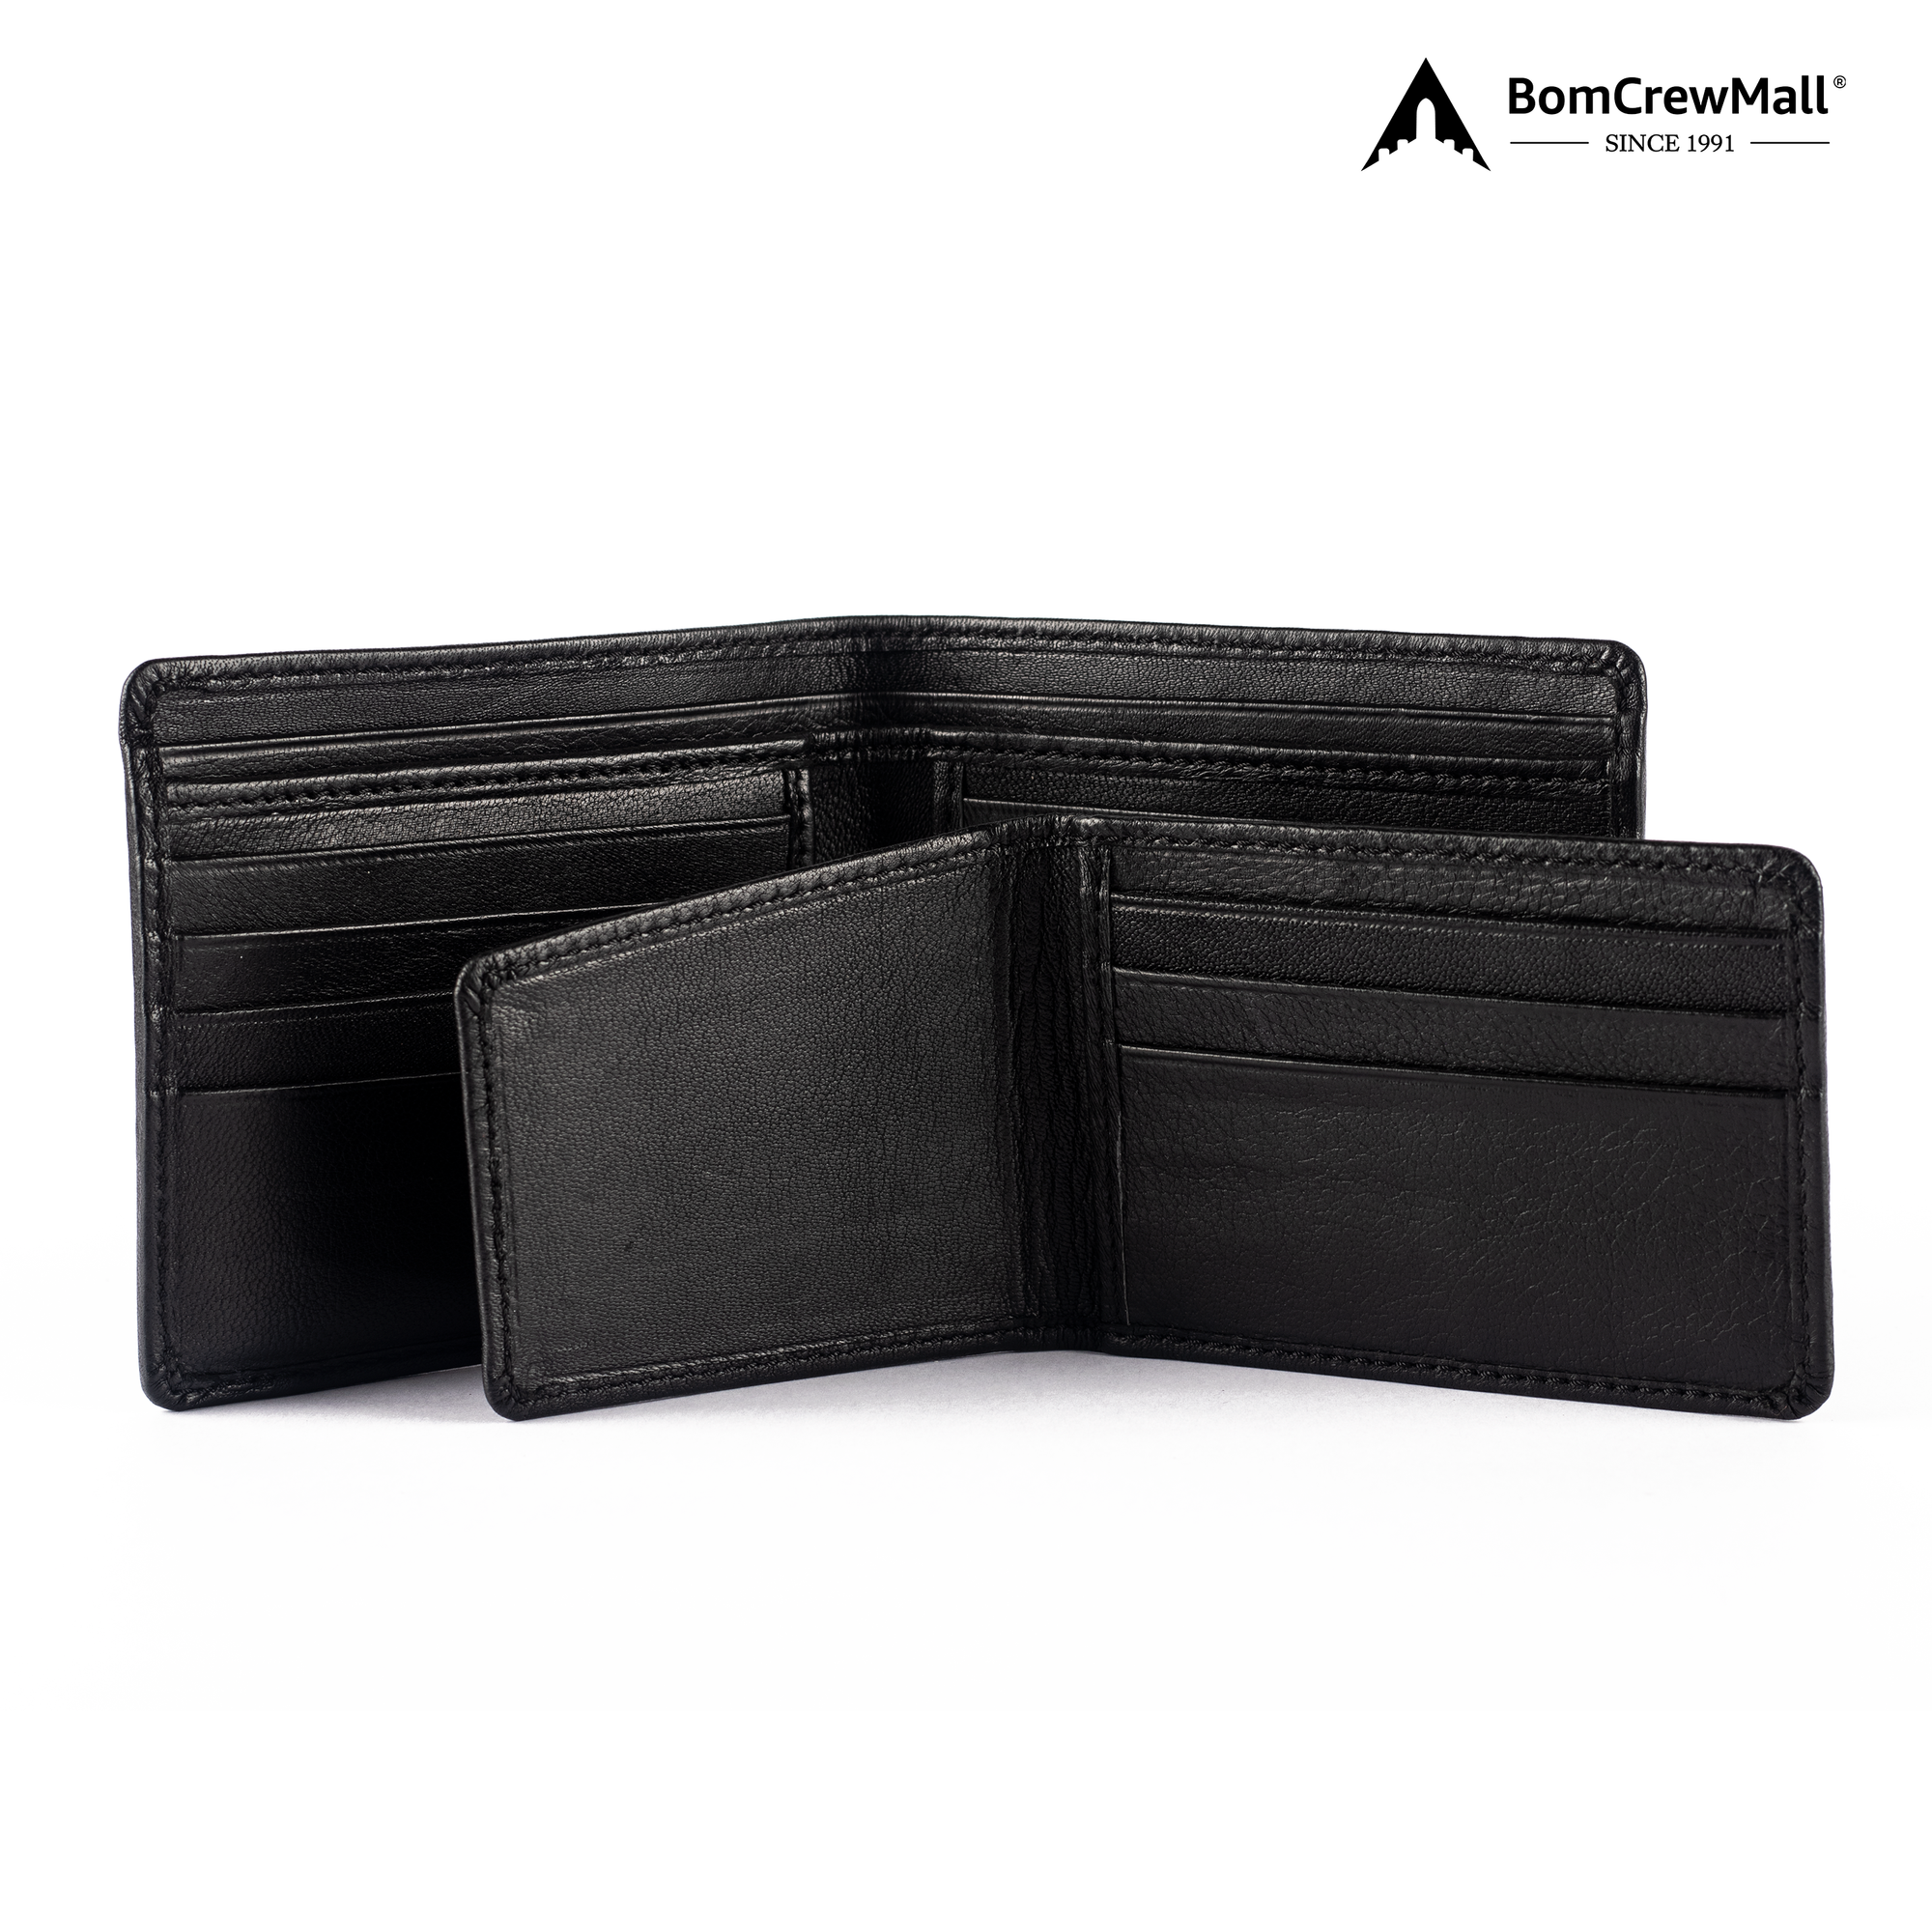 Image displays black Leather wallets 